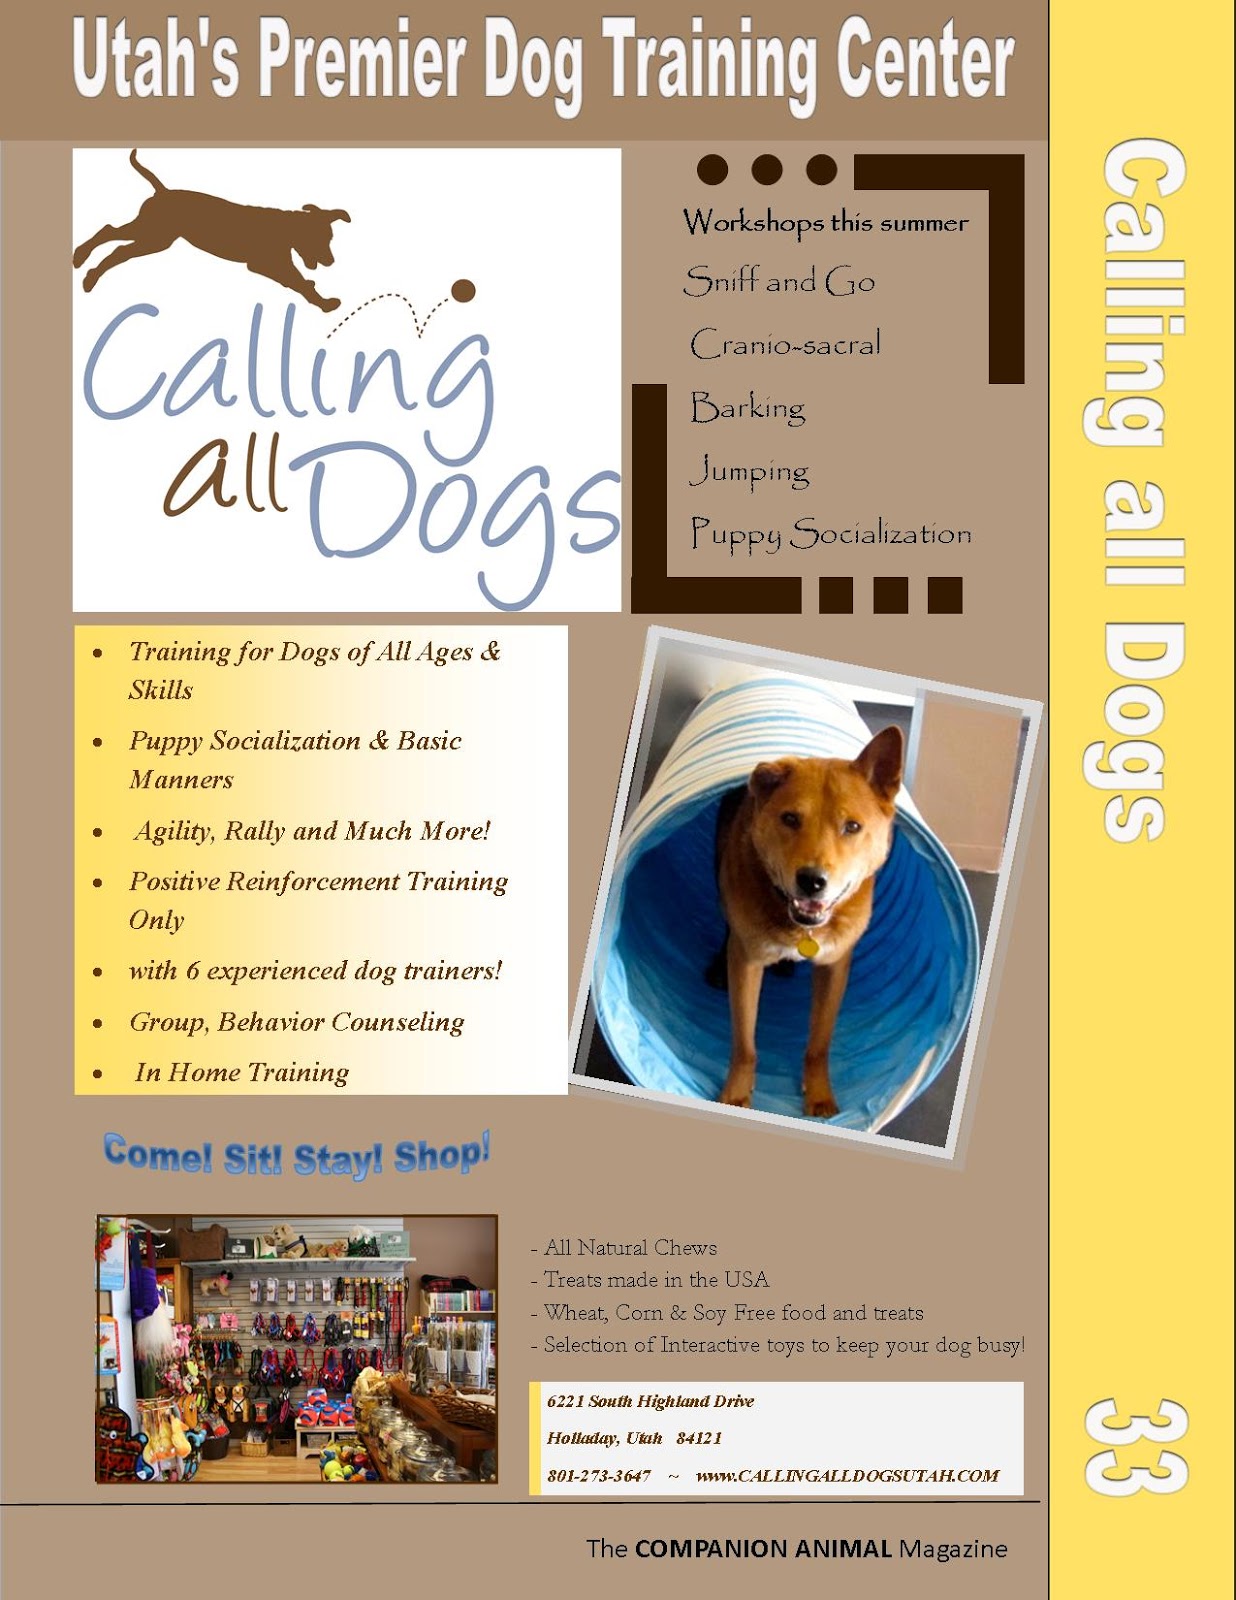 The Companion Animal Magazine CALLING ALL DOGS Utah's Premier Dog Training Center